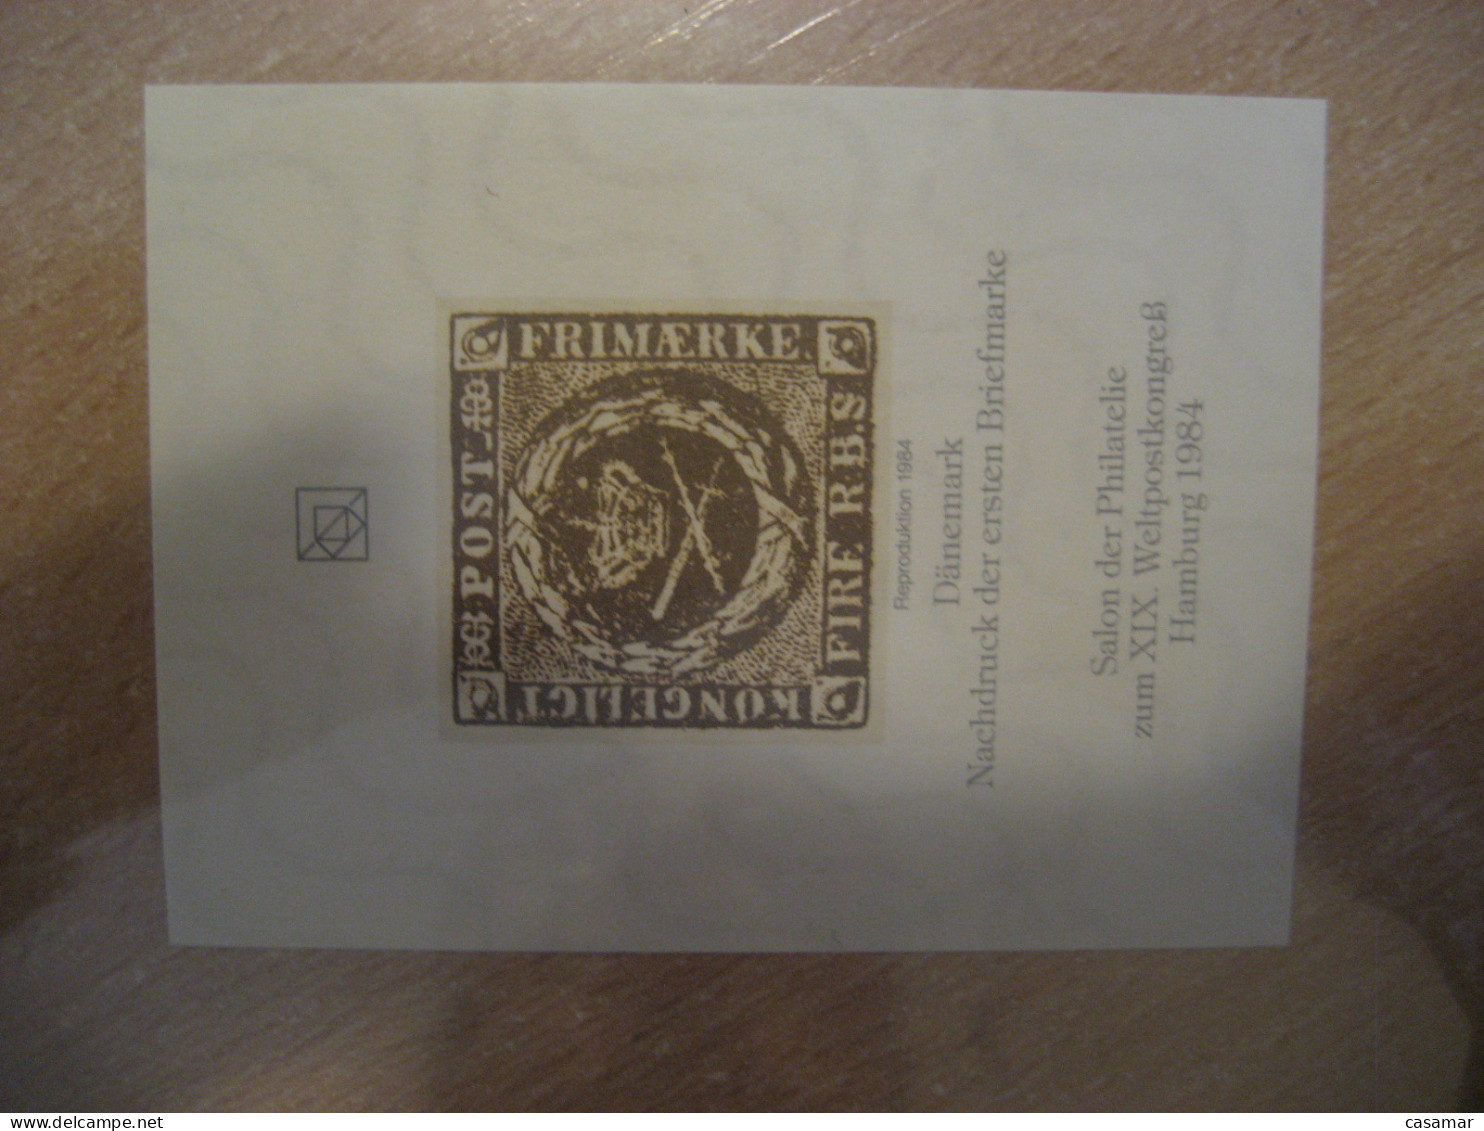 HAMBURG 1984 DENMARK Imperforated Reproduktion Proof Epreuve Nachdruck Poster Stamp Vignette GERMANY Label - Ensayos & Reimpresiones